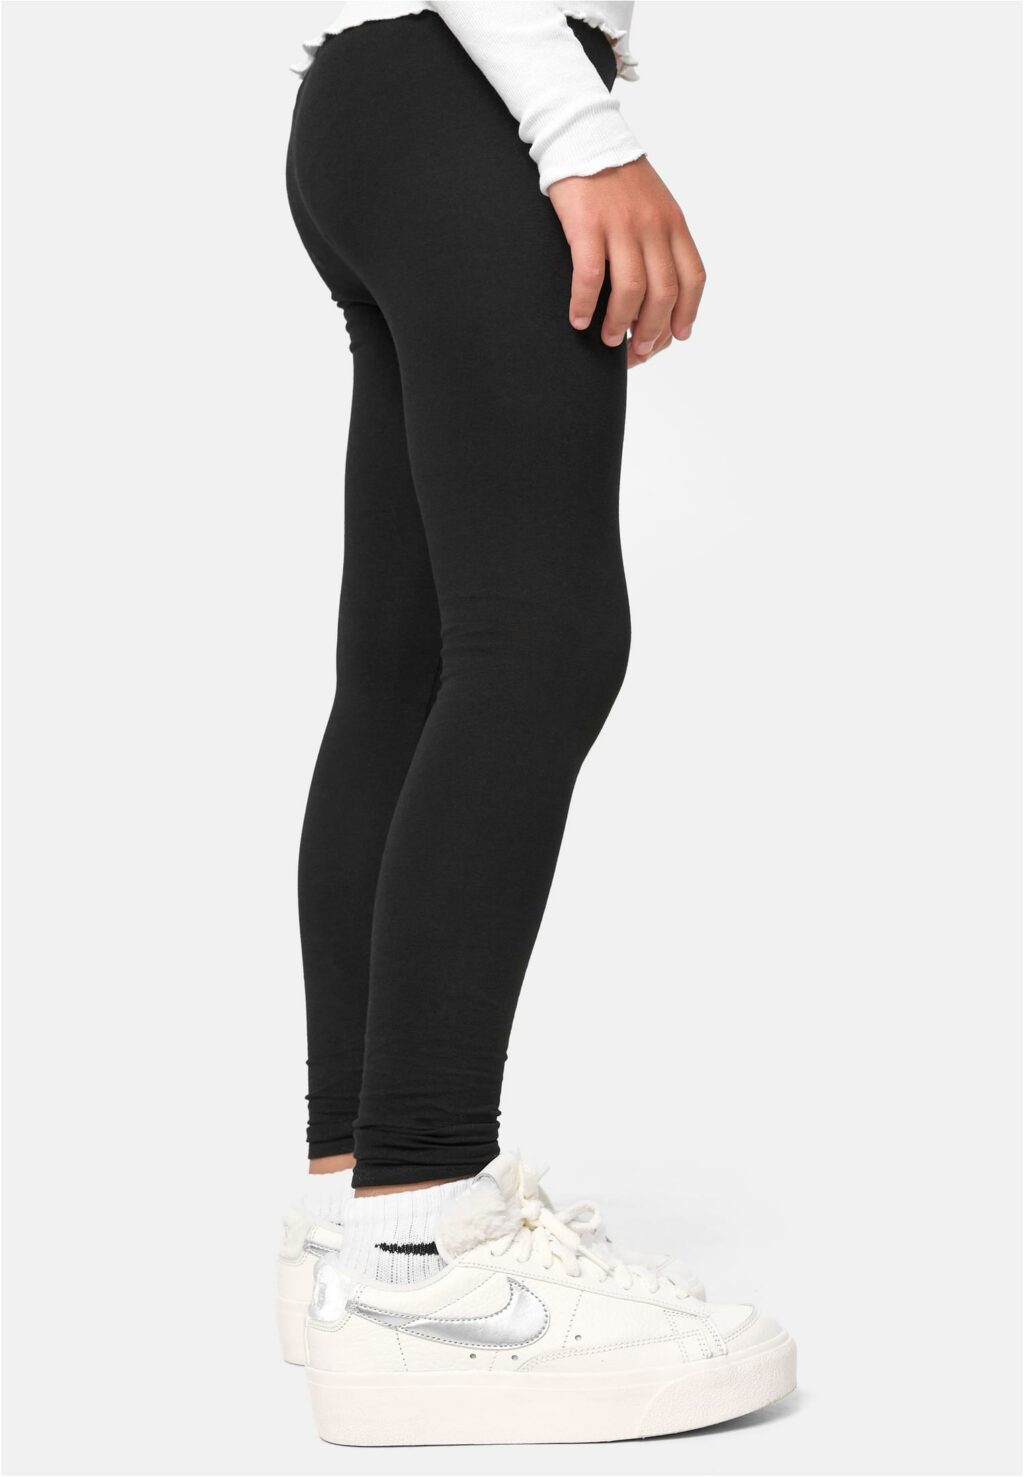 Girls Jersey Leggings 2-Pack black/black UCK605A